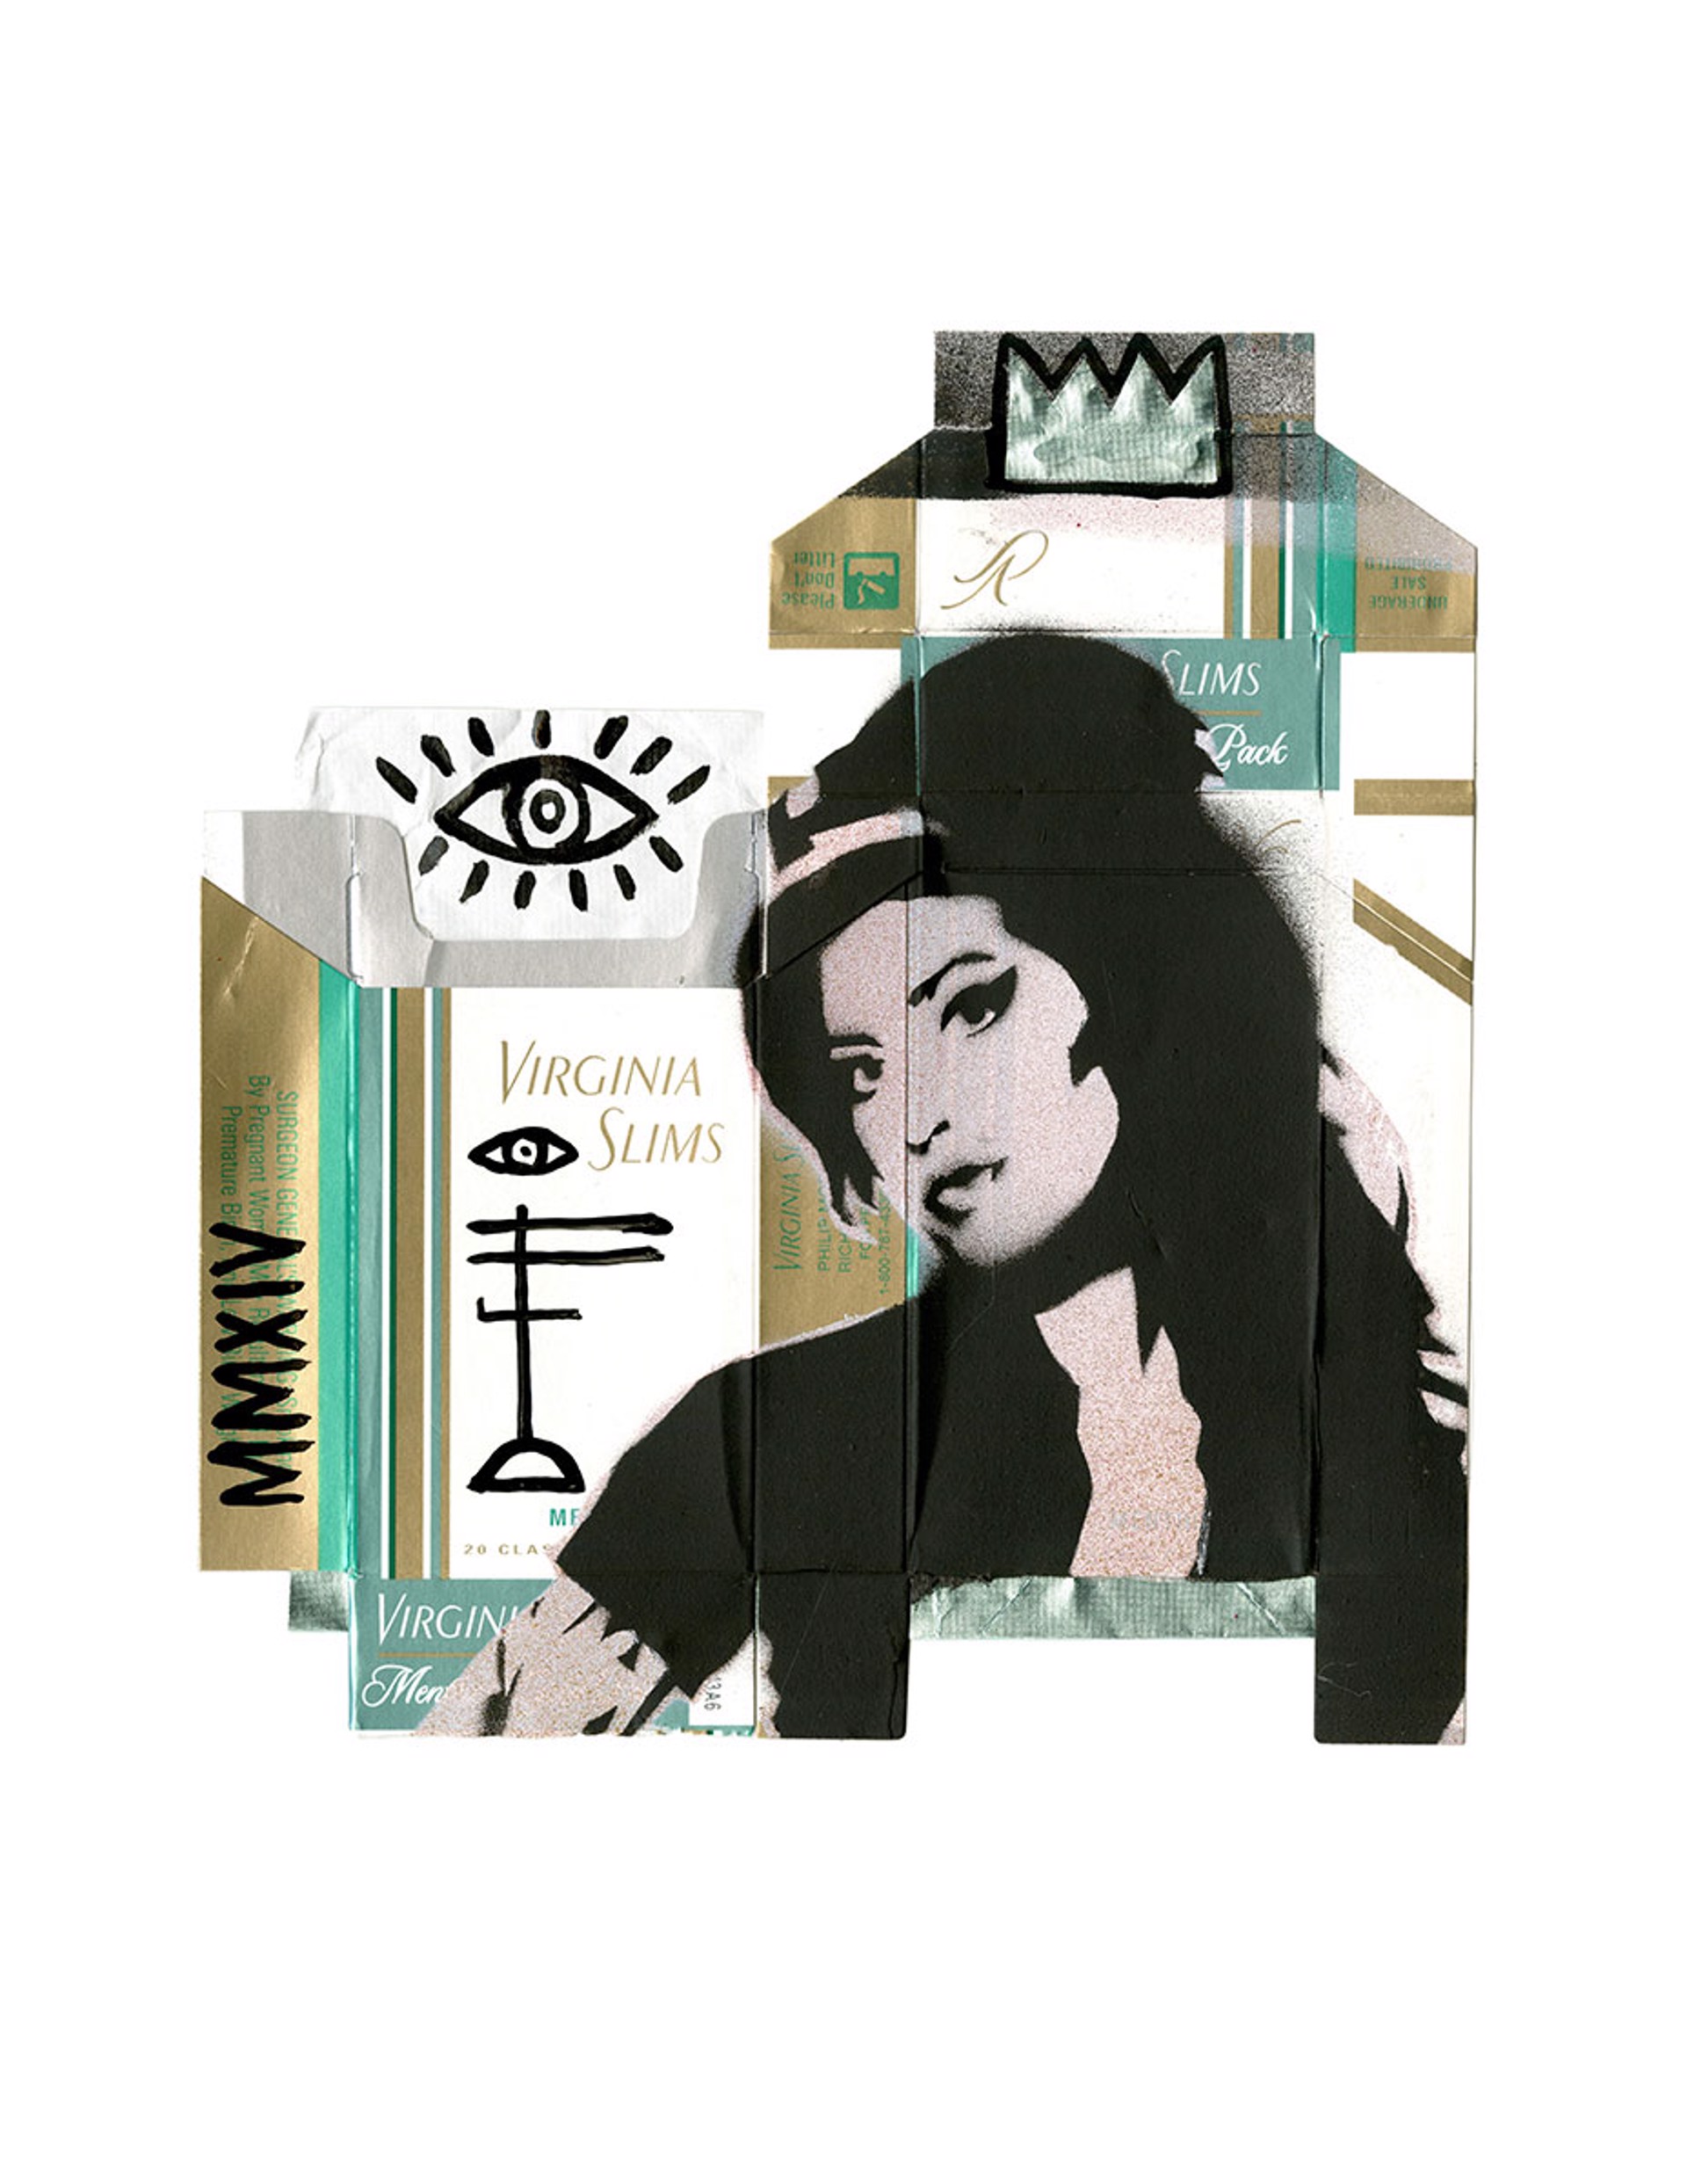 Amy Winehouse & Virginia Slims by David Hollier